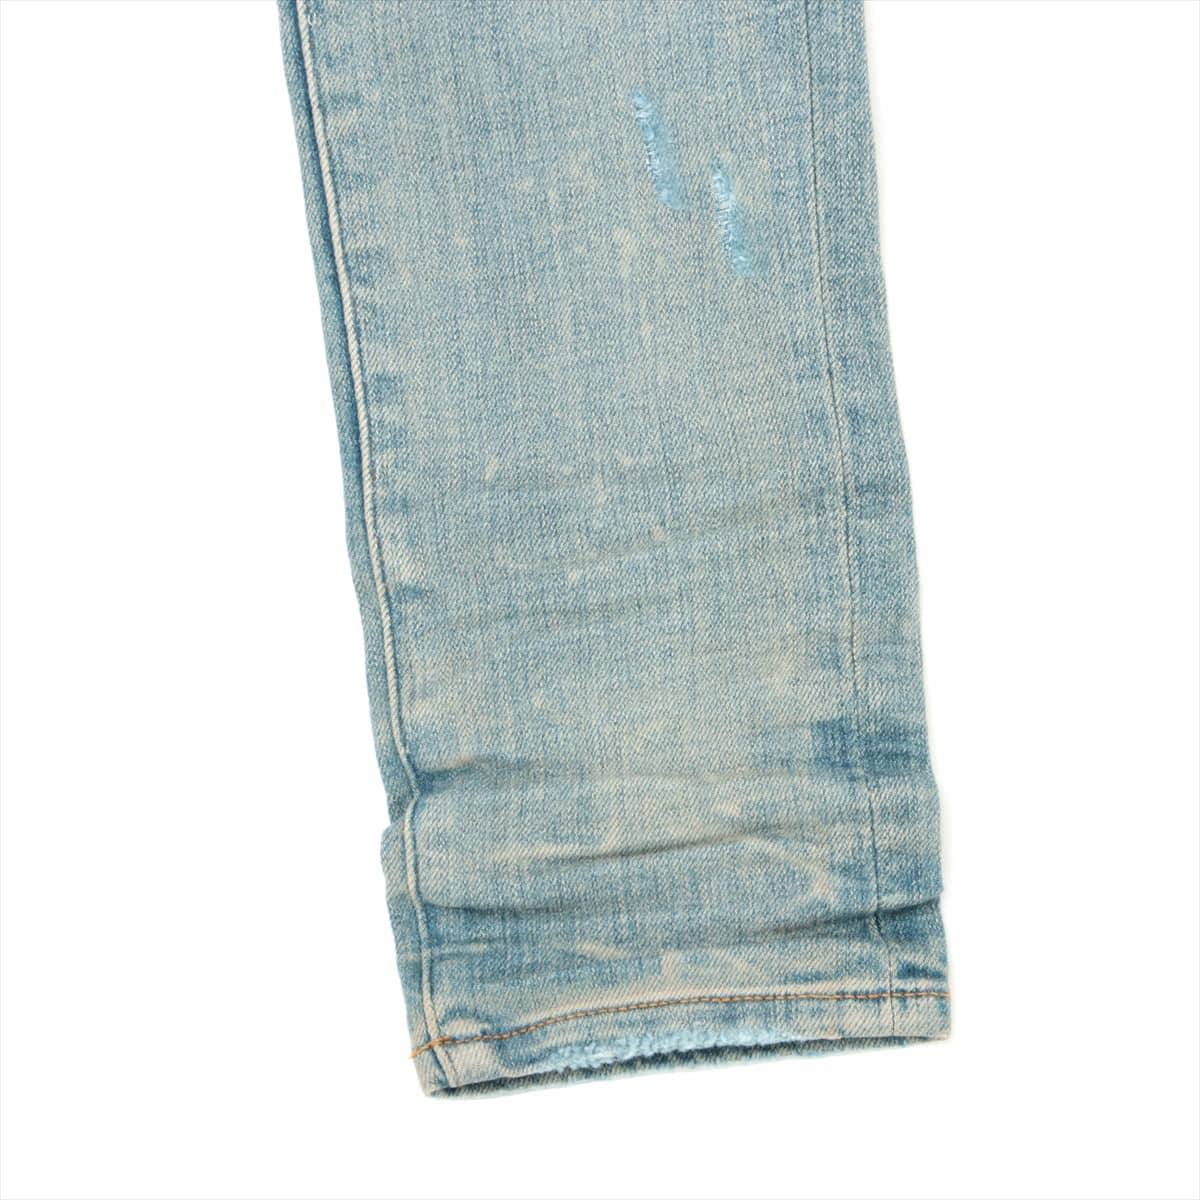 AMIRI 22SS Cotton & polyester Denim pants 28 Men's Blue  Damage processing PXMD005-408